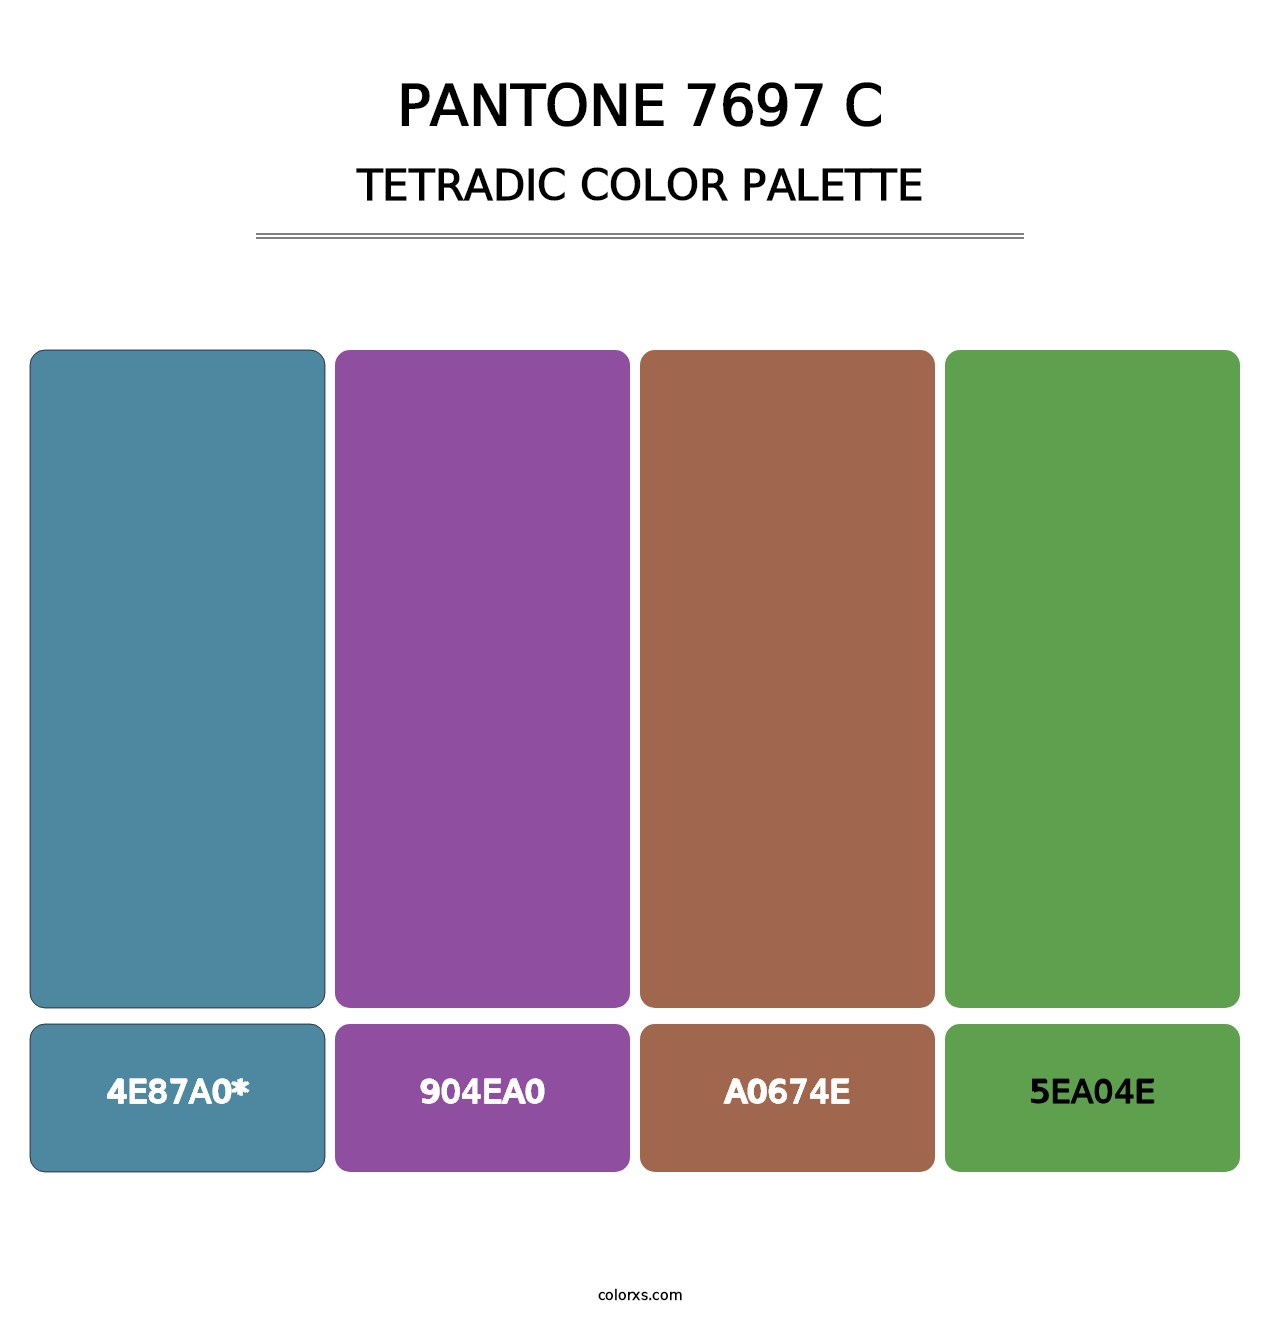 PANTONE 7697 C - Tetradic Color Palette